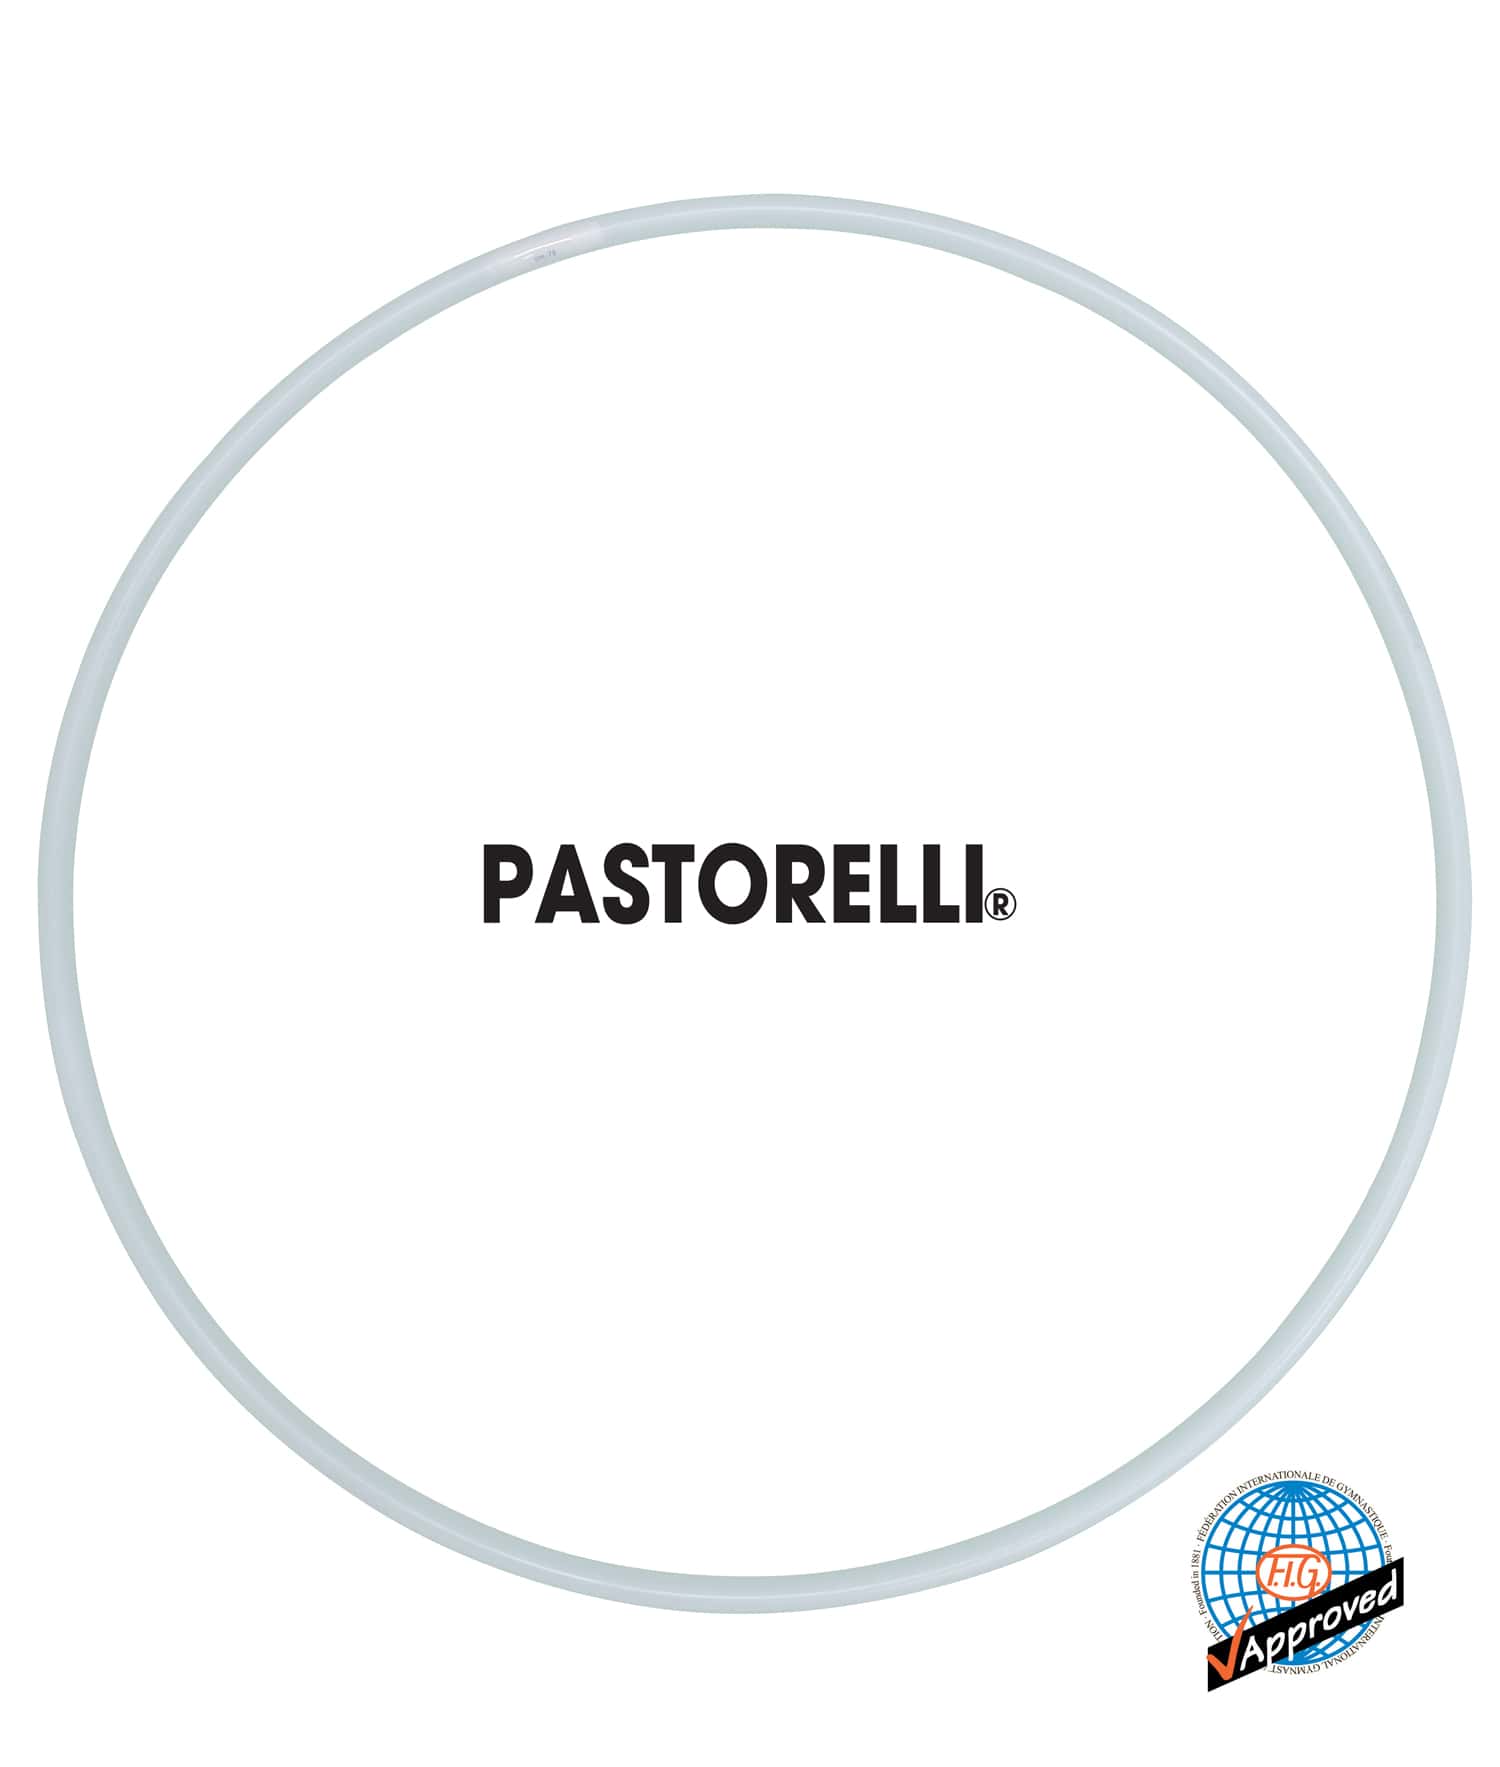 Pastorelli Rodeo Rhythmic Gymnastic Hoop (Laser logo FIG approved)